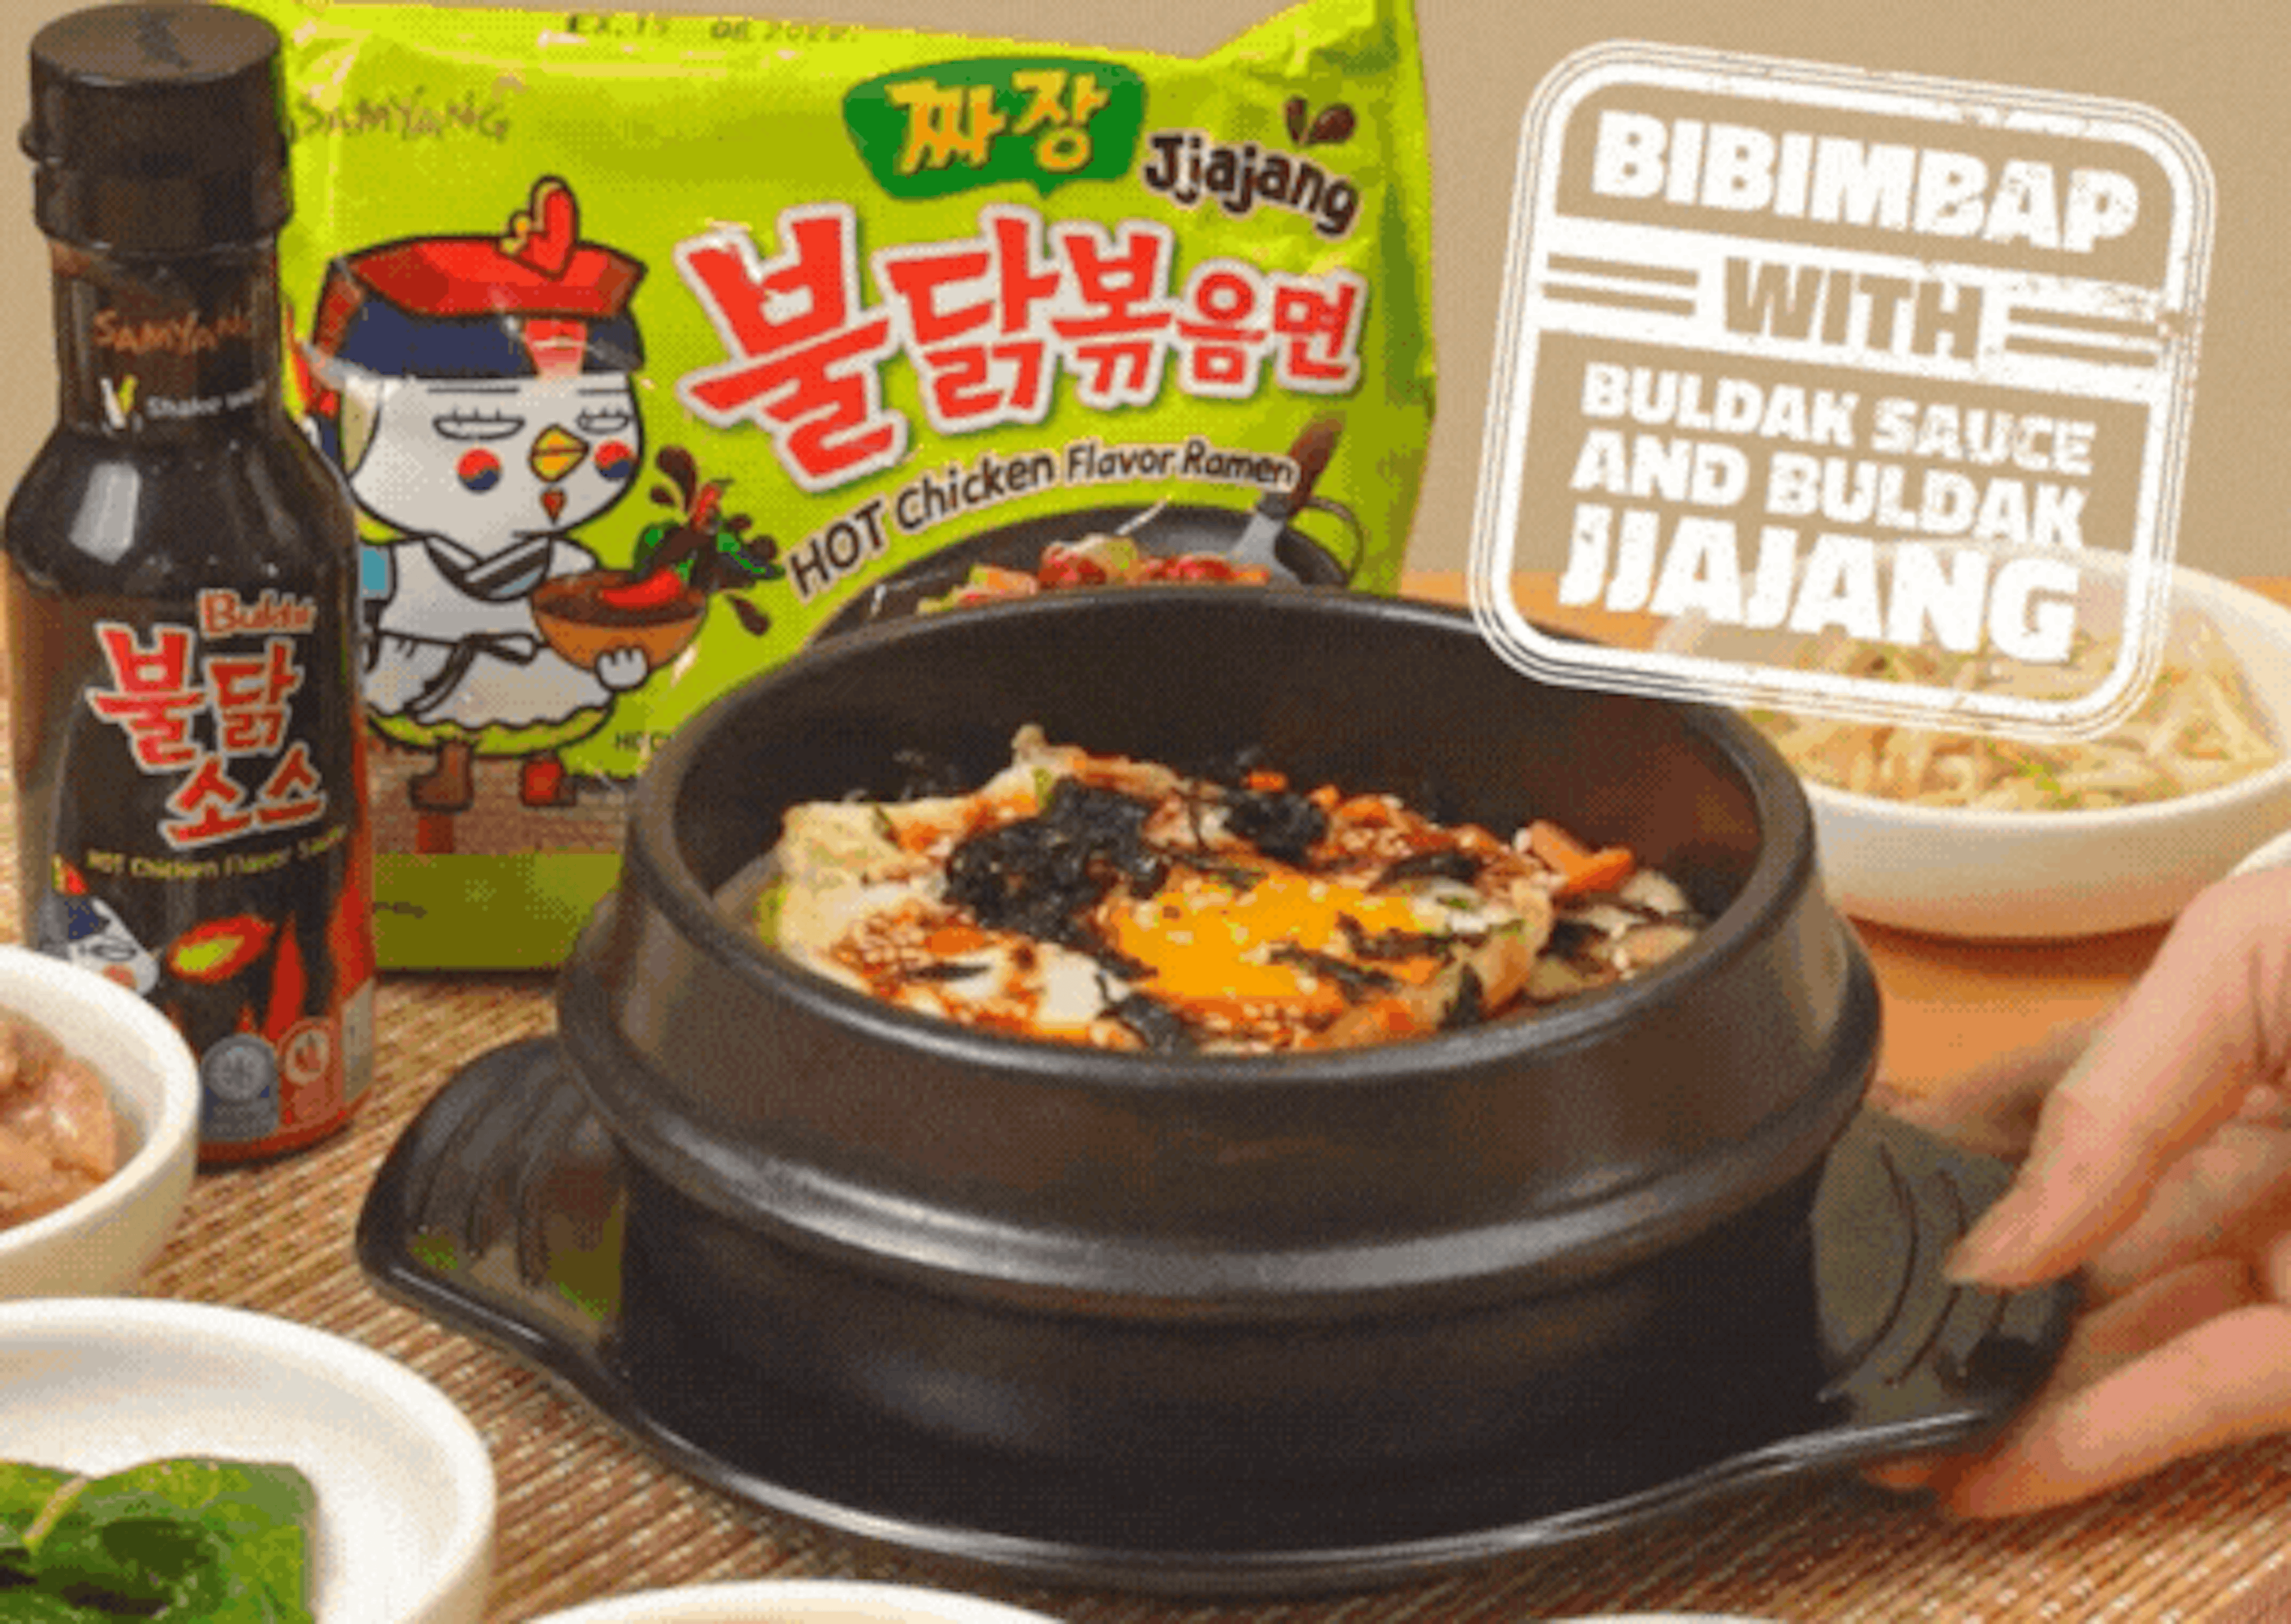 Rezept: Bibimbap mit Buldak-Soße und Buldak Jjajang Ramyeon